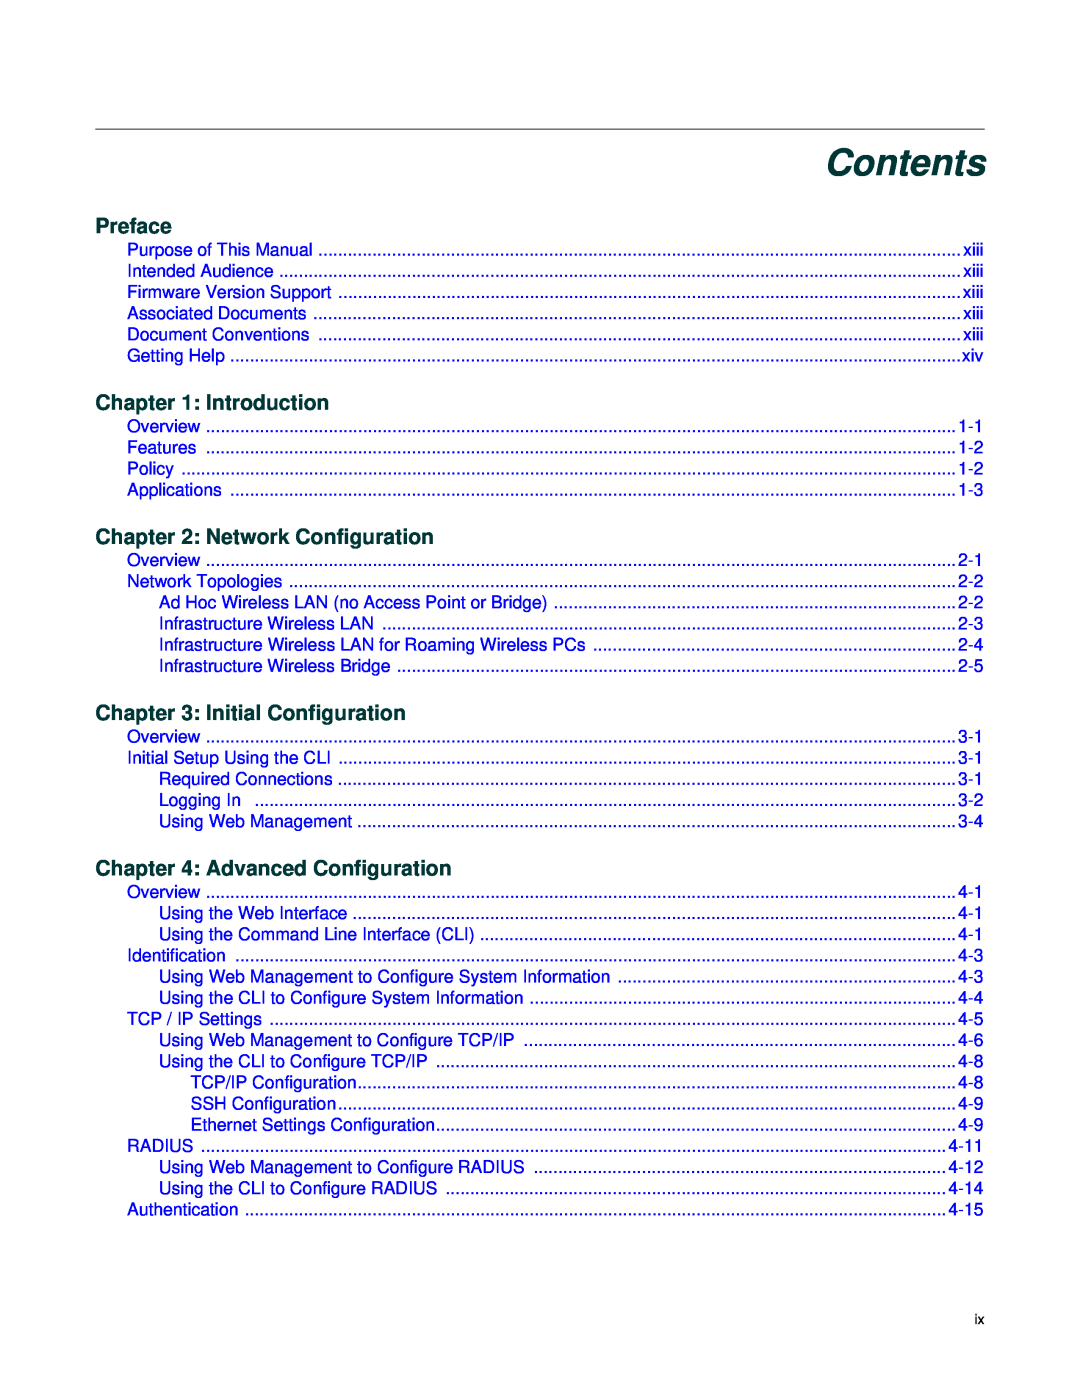 Enterasys Networks RBT-4102 manual Contents, Preface, Introduction, Network Configuration, Initial Configuration 